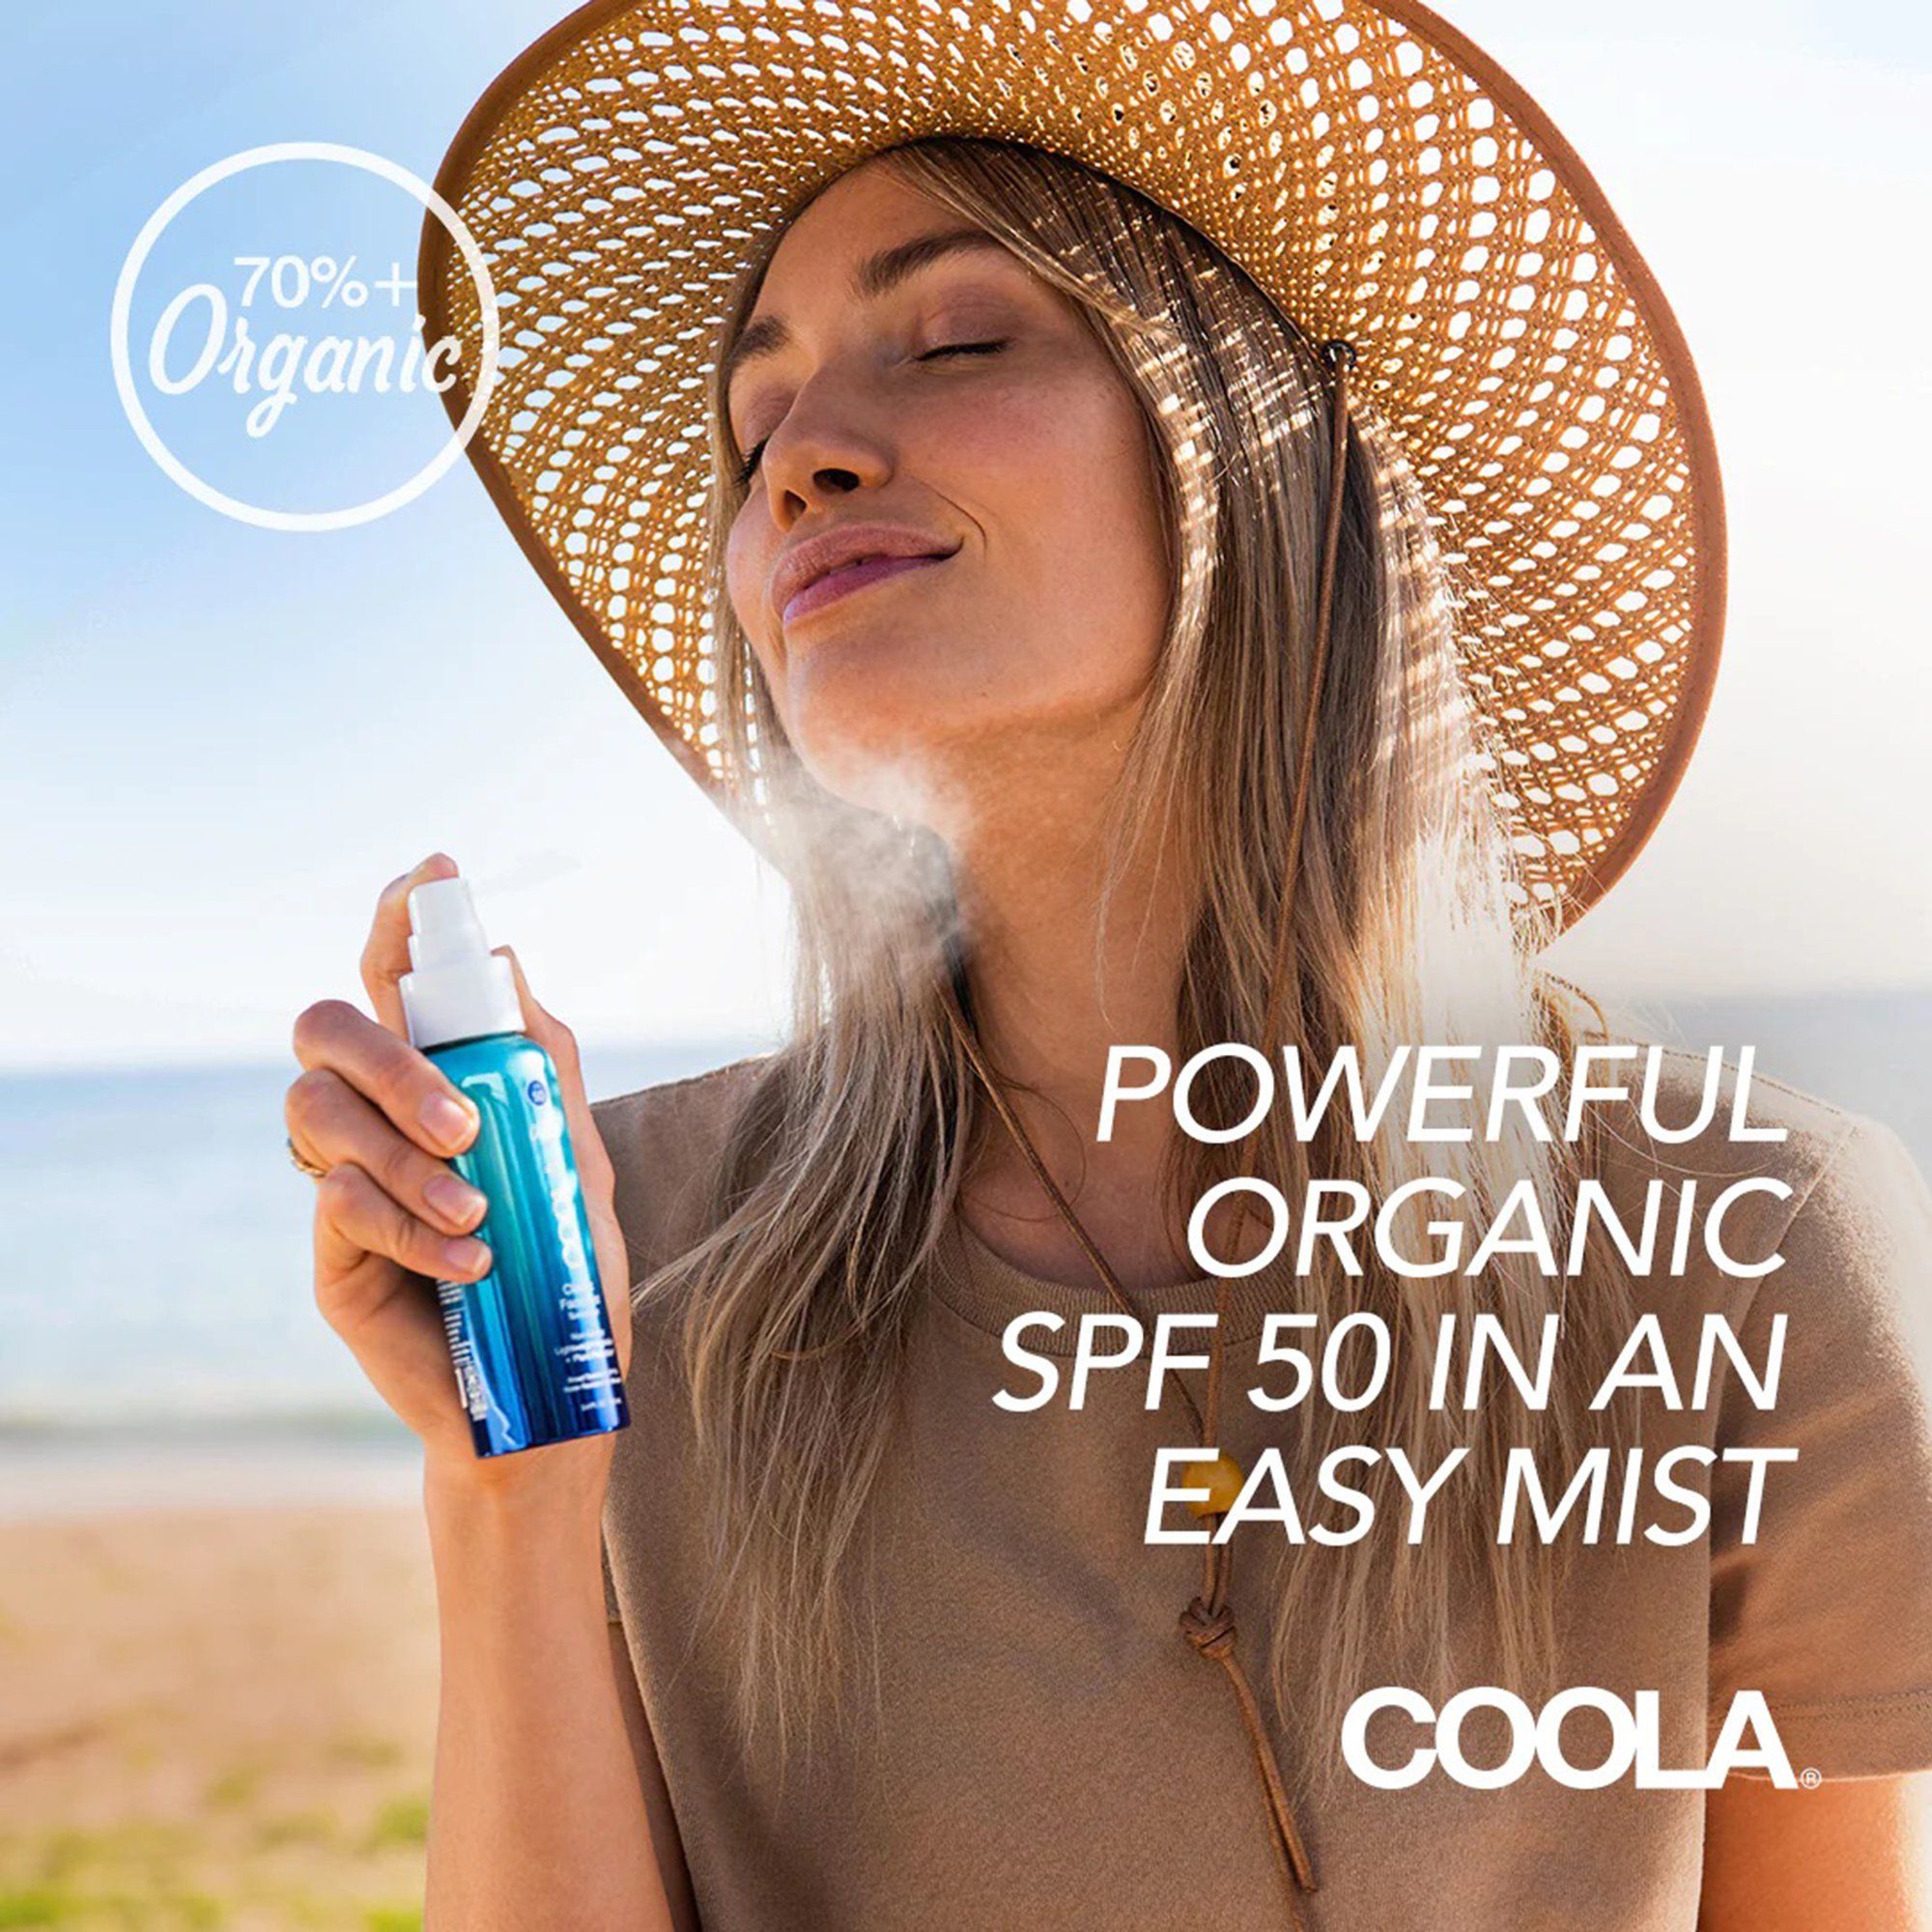 COOLA Classic Face Organic Sunscreen Mist, SPF 50 - 3.4 fl oz